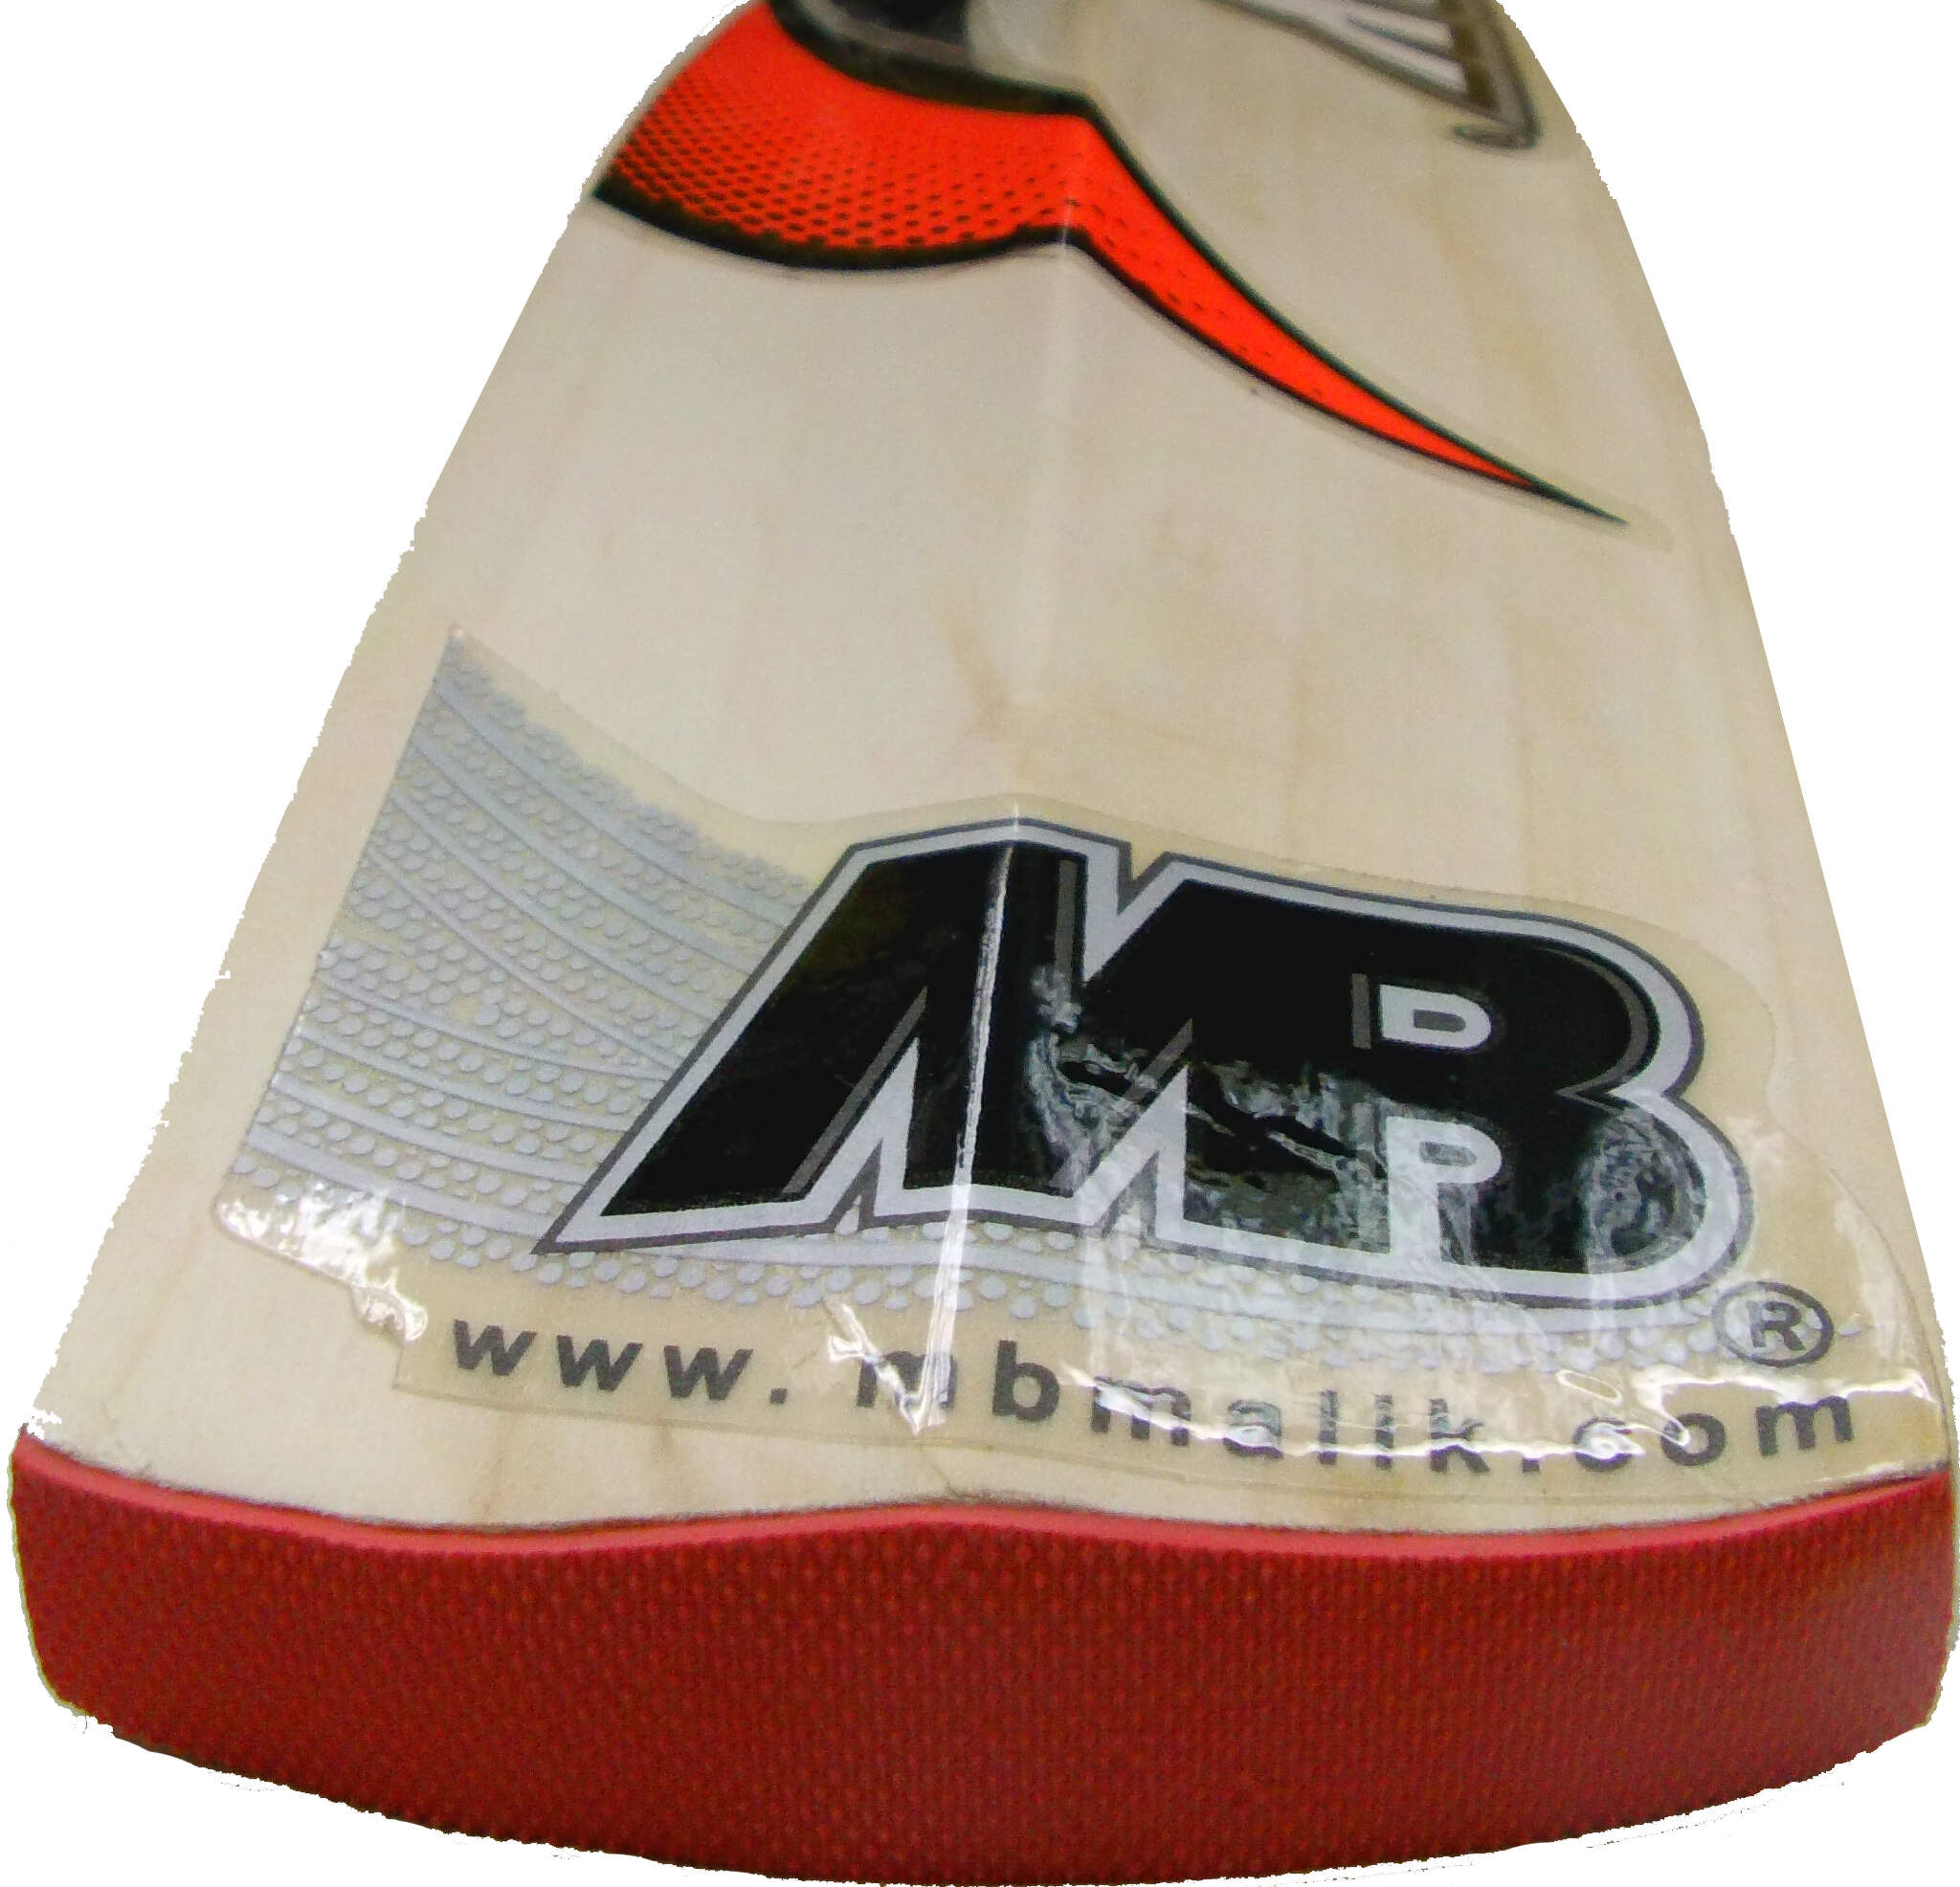 Mb Malik Monarch English Willow Cricket Bat SH Free Bat Cover Was £89.00 Now £69.99